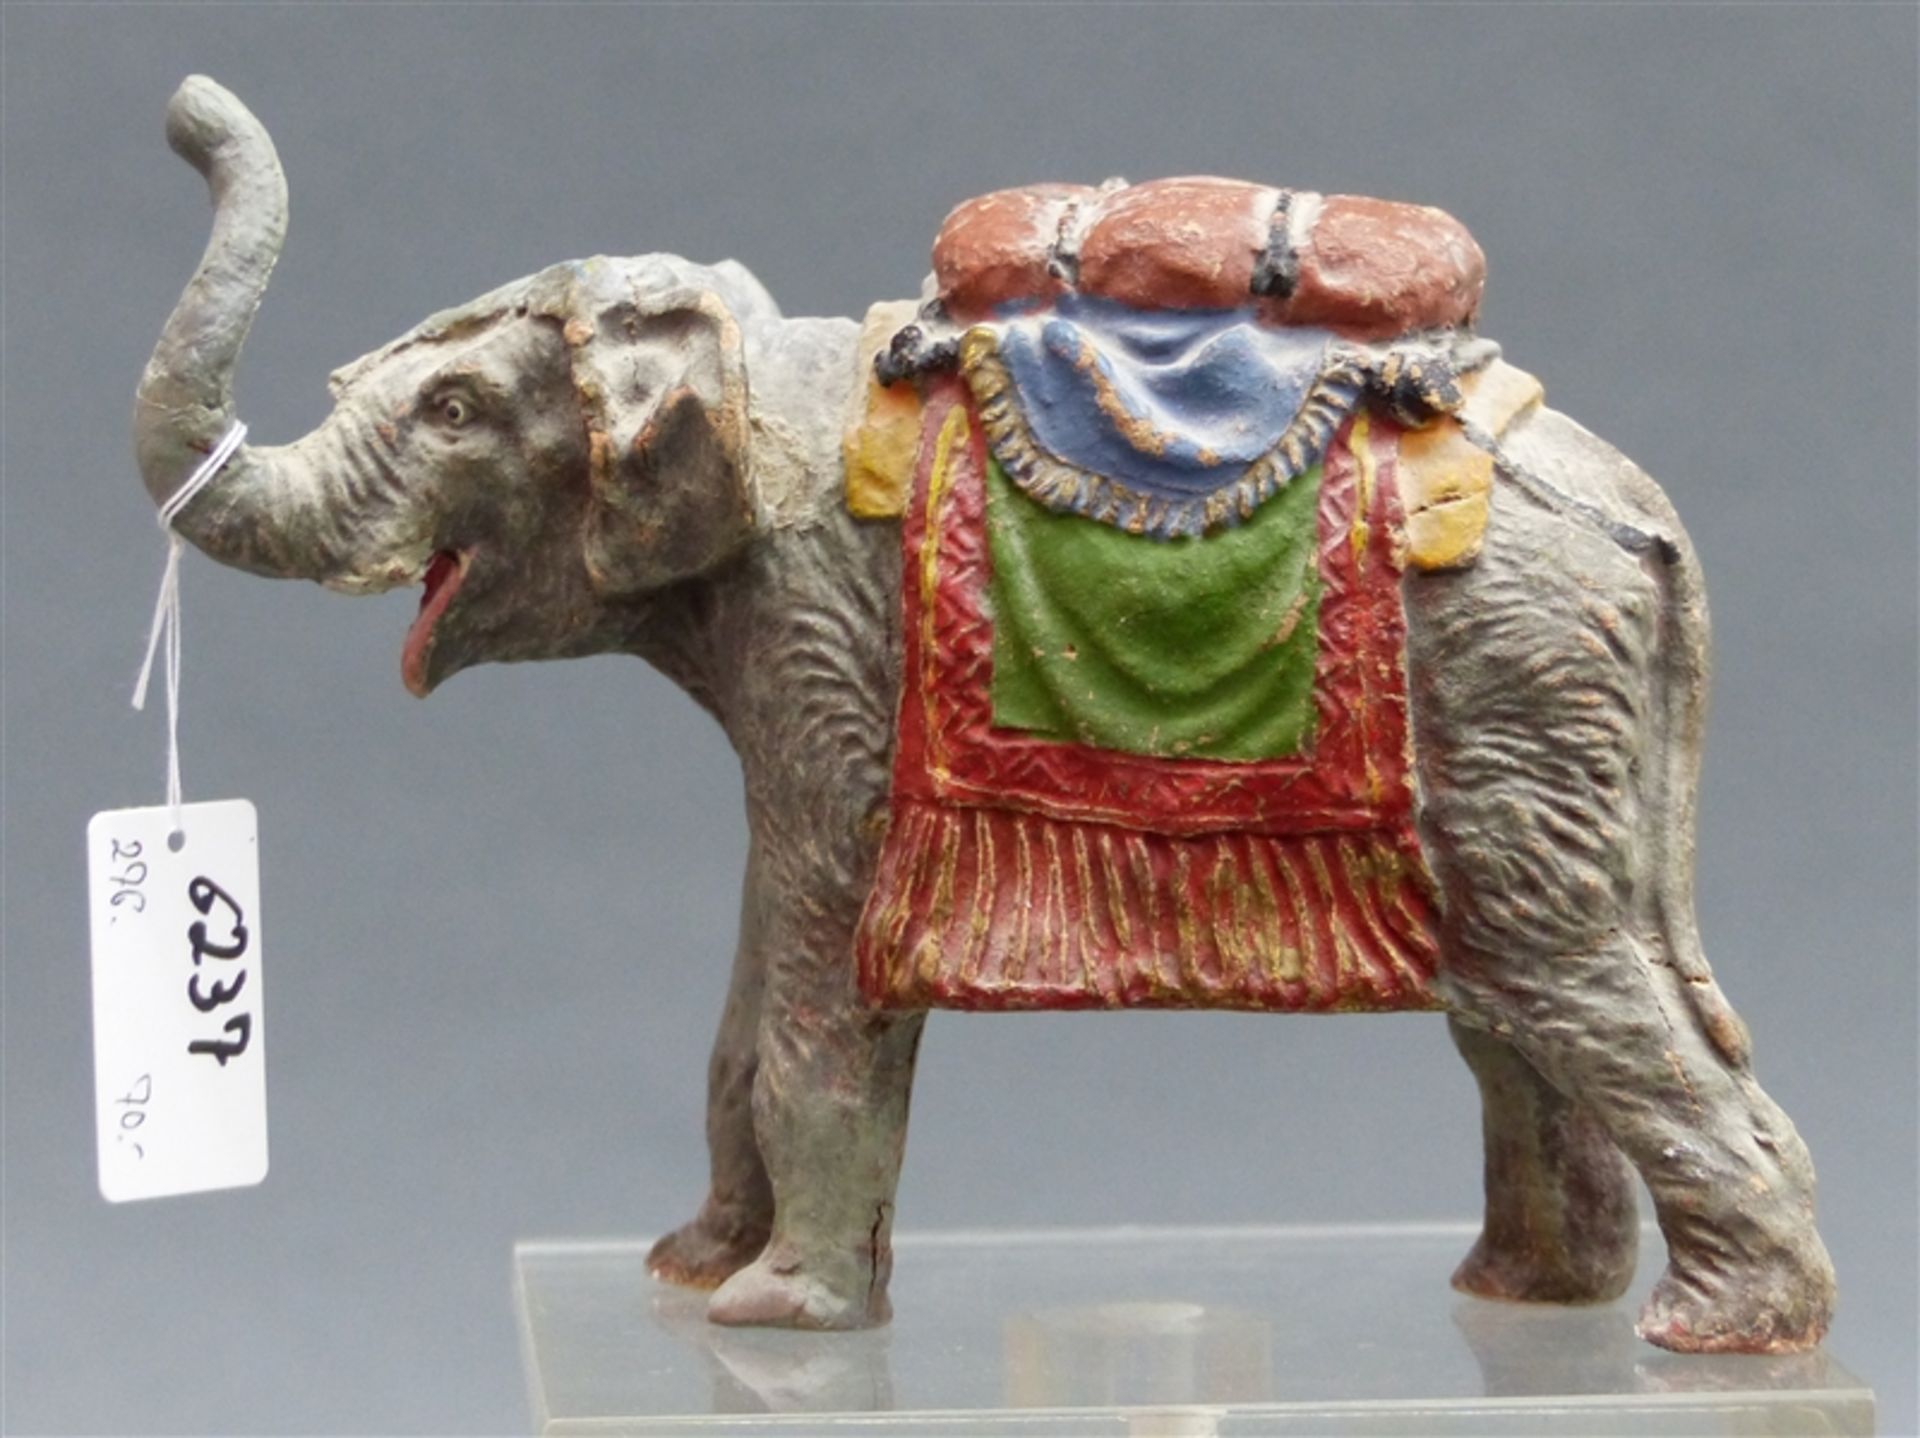 Elastolinskulptur um 1900, geschmückter trompetender Elefant, fand als Sparkasse Verwendung, evtl.